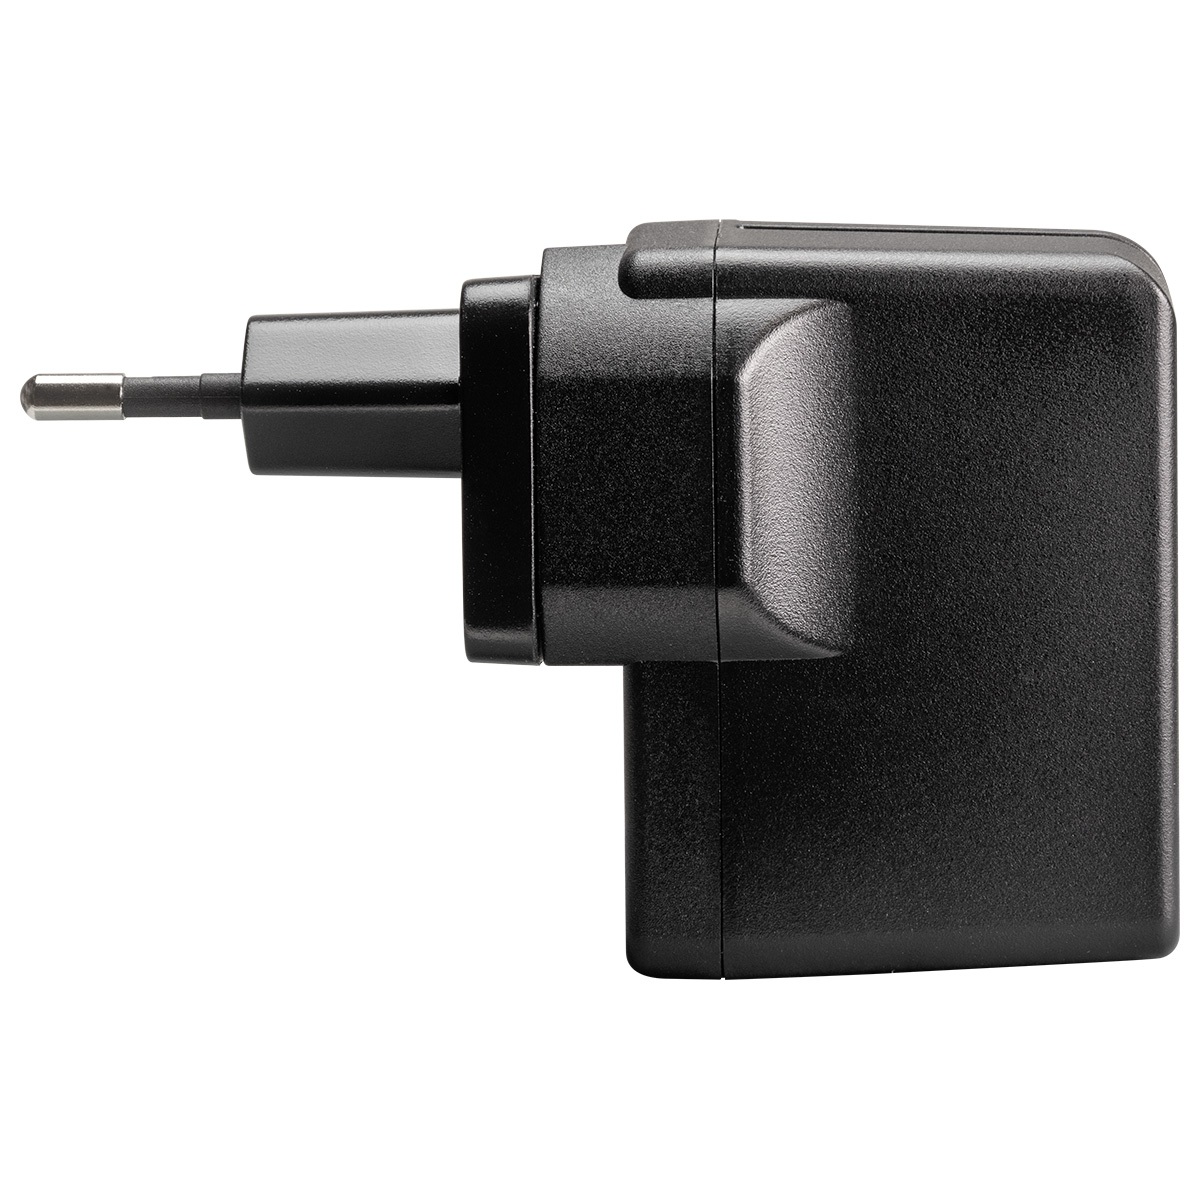 USB power adapter for Boxy BLDC Nightstand, interchangeable plug EU and UK